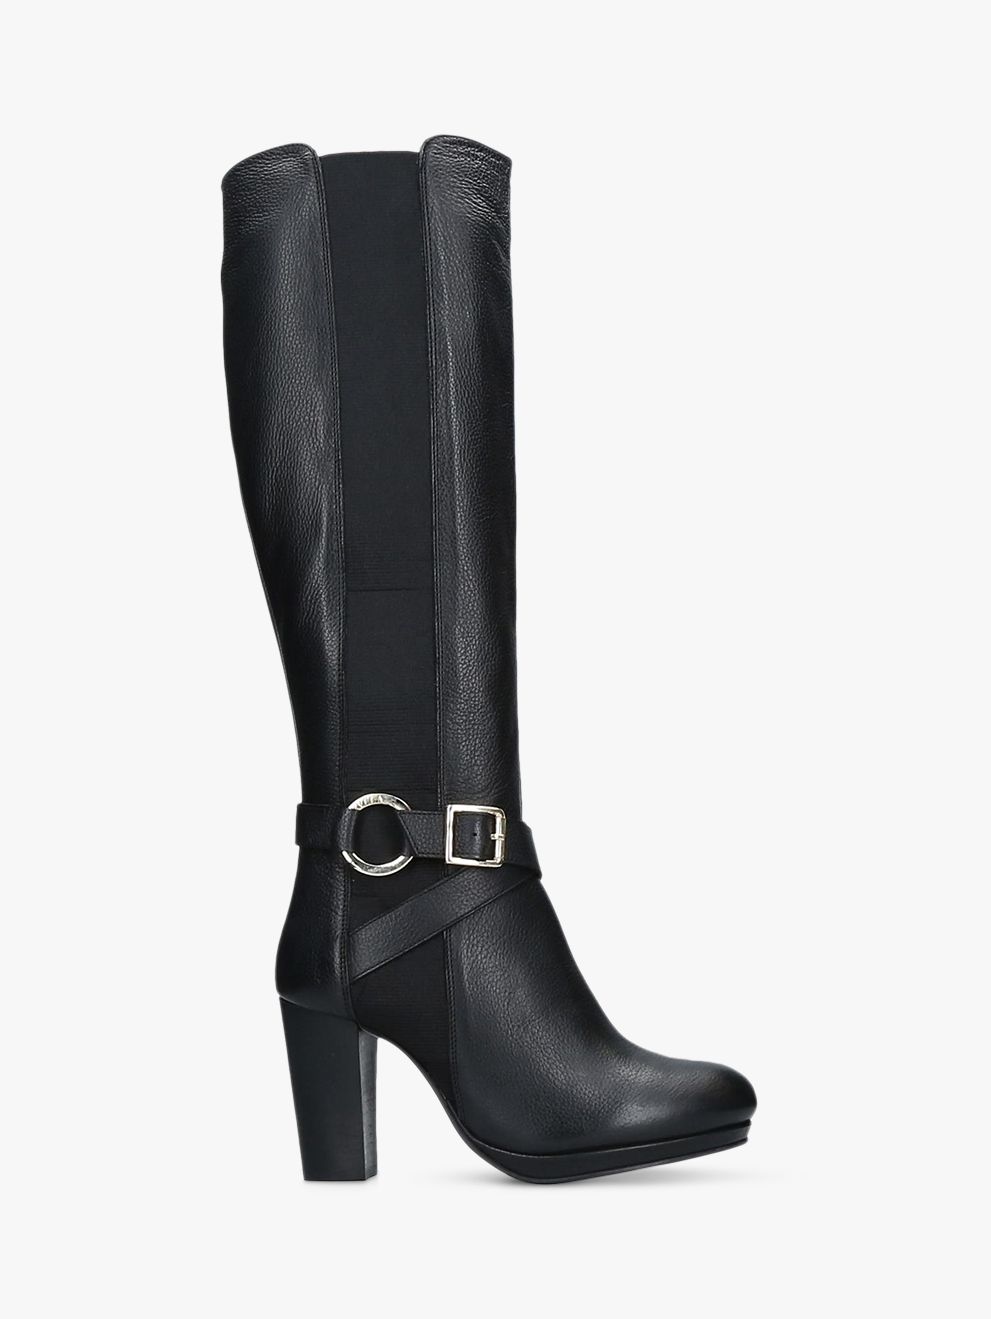 Carvela Total Knee High Block Heel Boots, Black Leather